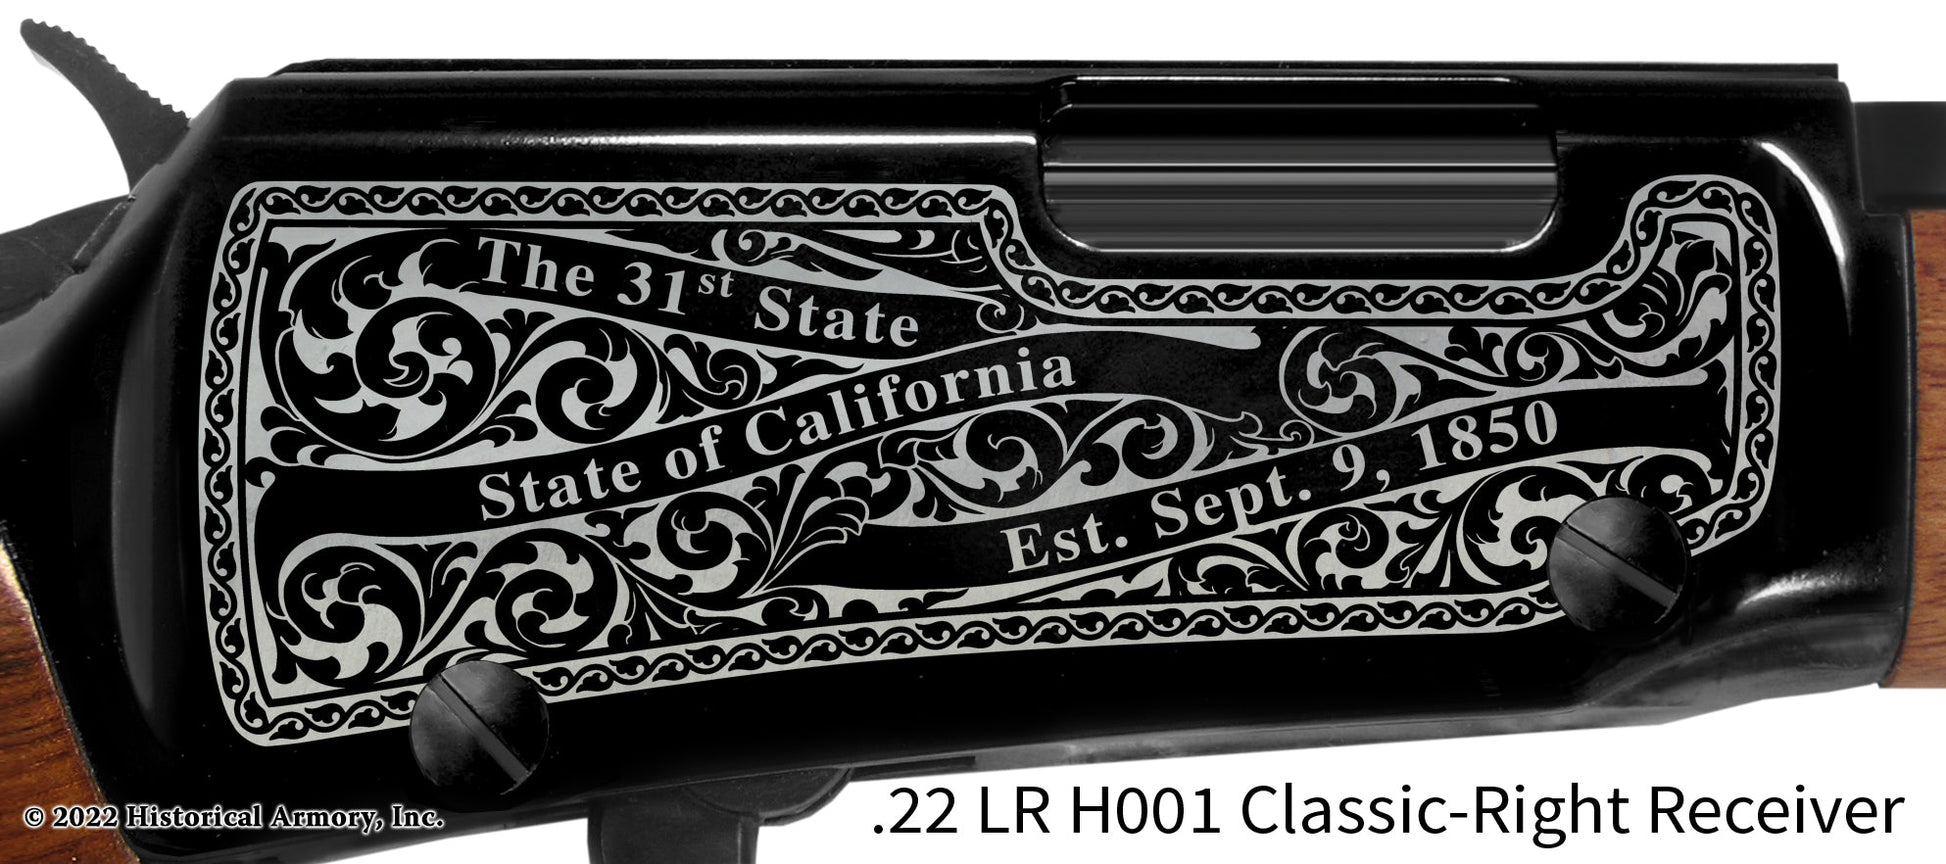 Glenn County California Engraved Henry H001 Rifle